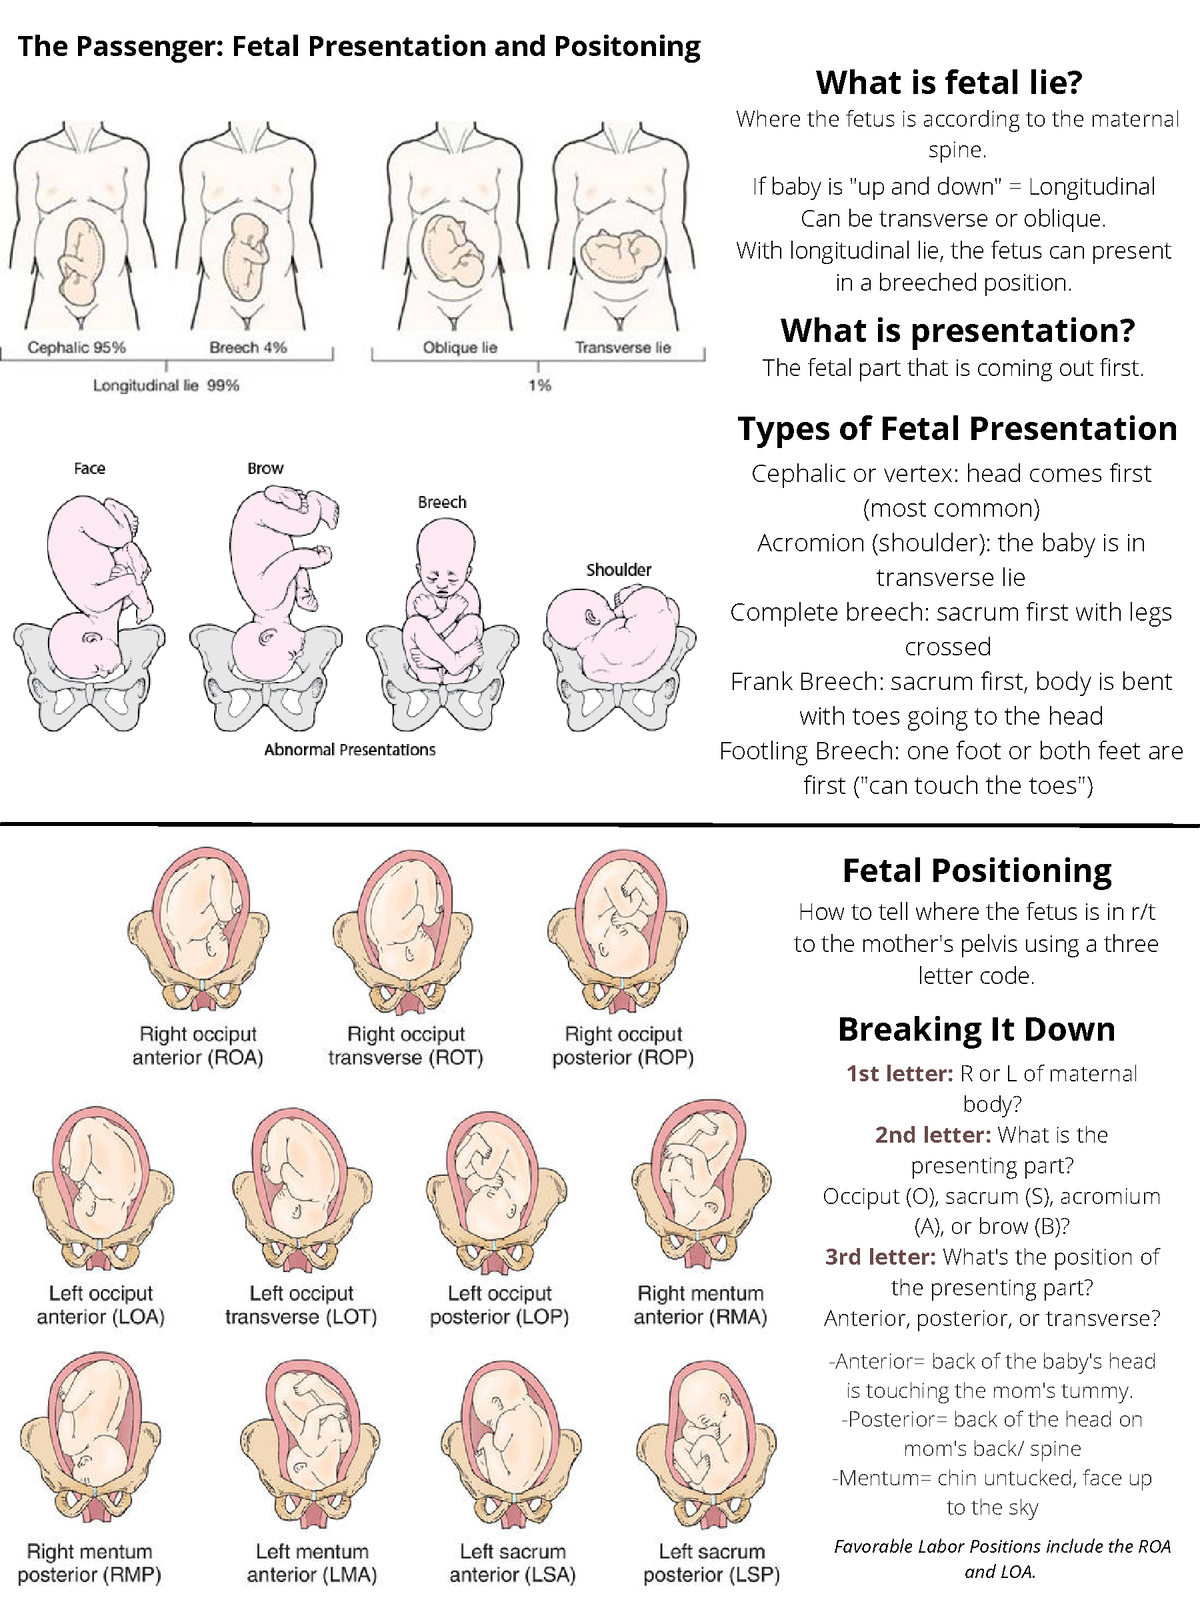 fetal presentation variable means in hindi